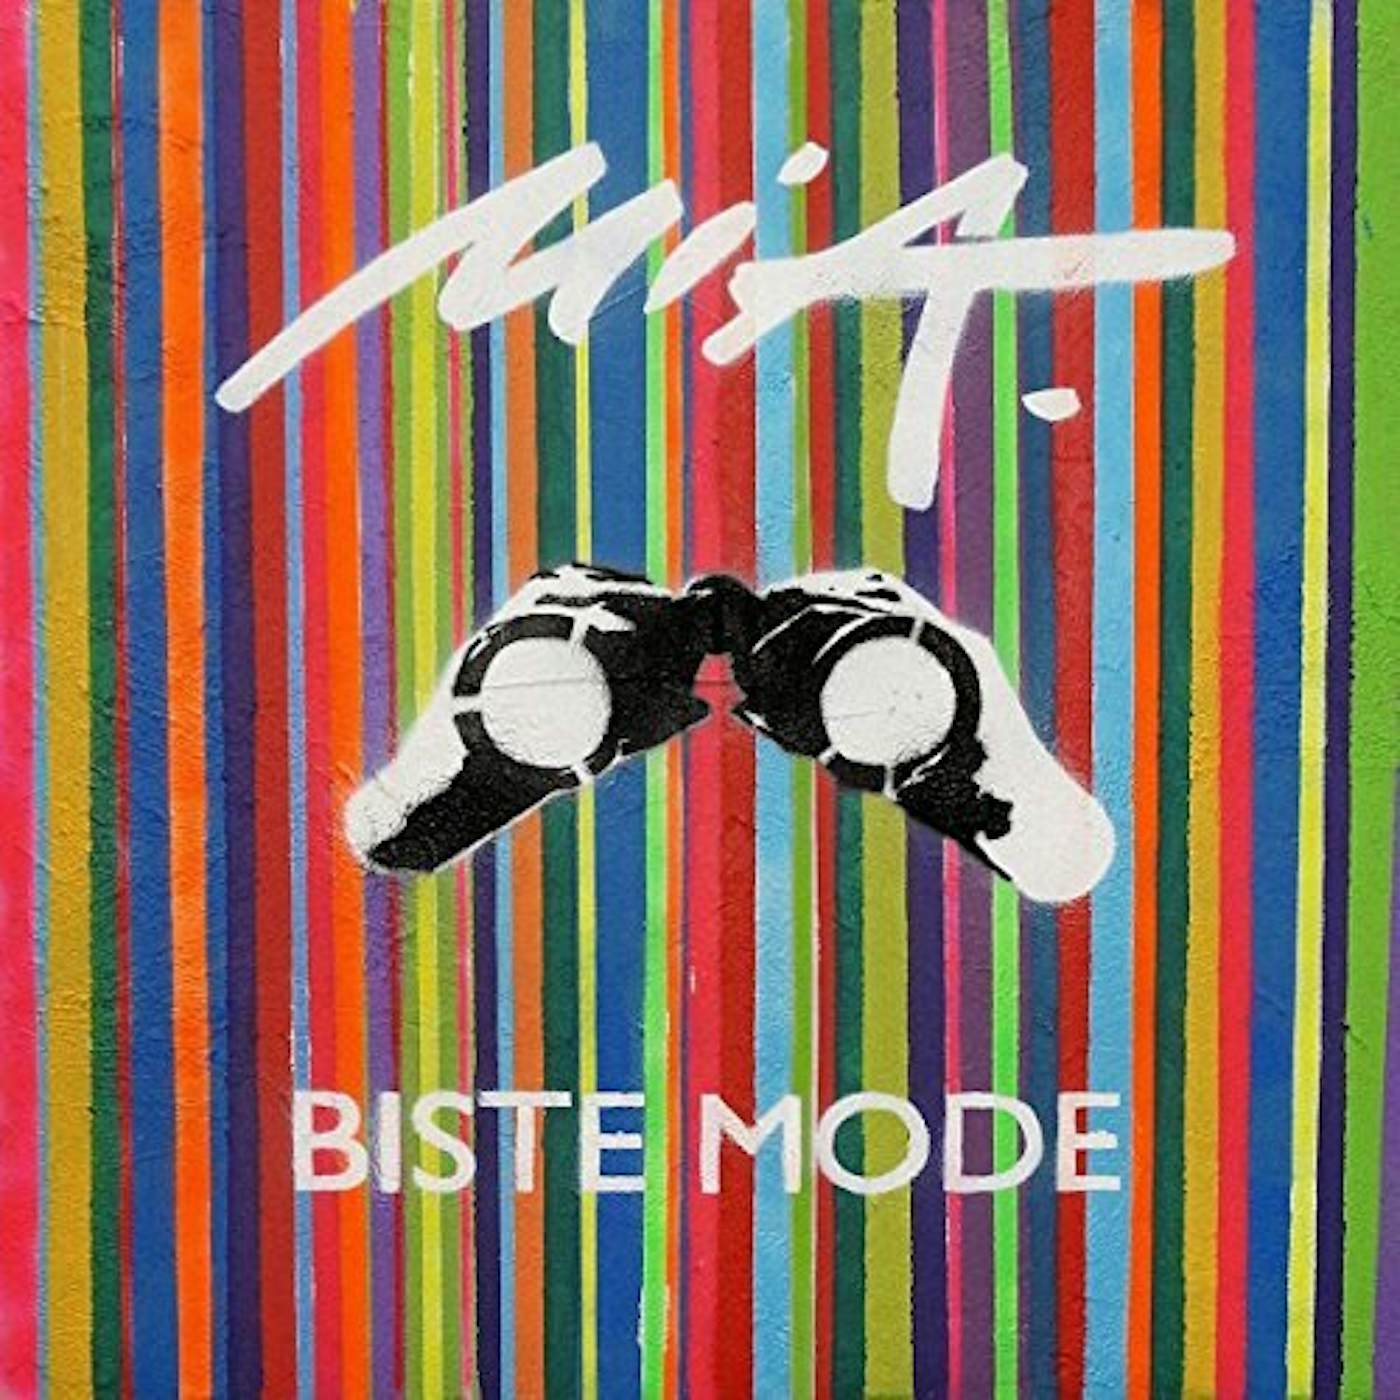 M.I.A. BISTE MODE Vinyl Record